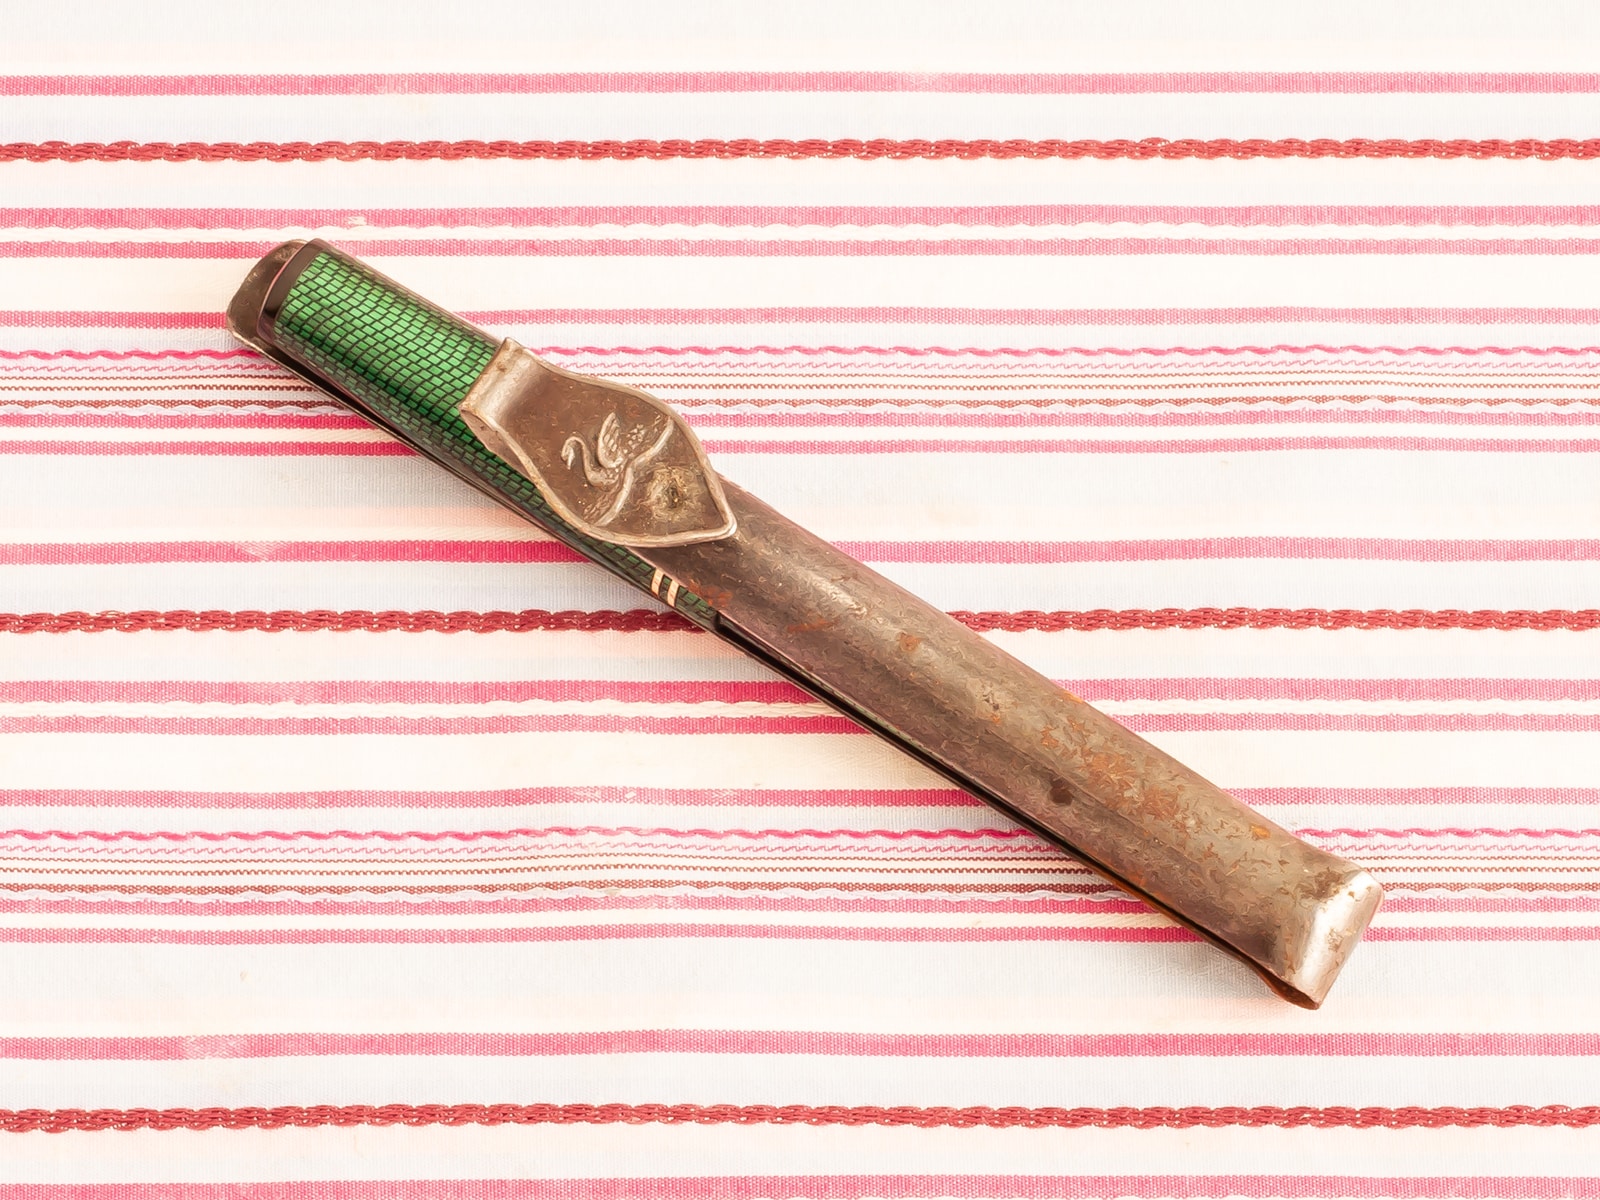 Vintage Mabit Todd Swan Leverless Green Lizard-Snake-skin fountain pen with Swan Metal clip